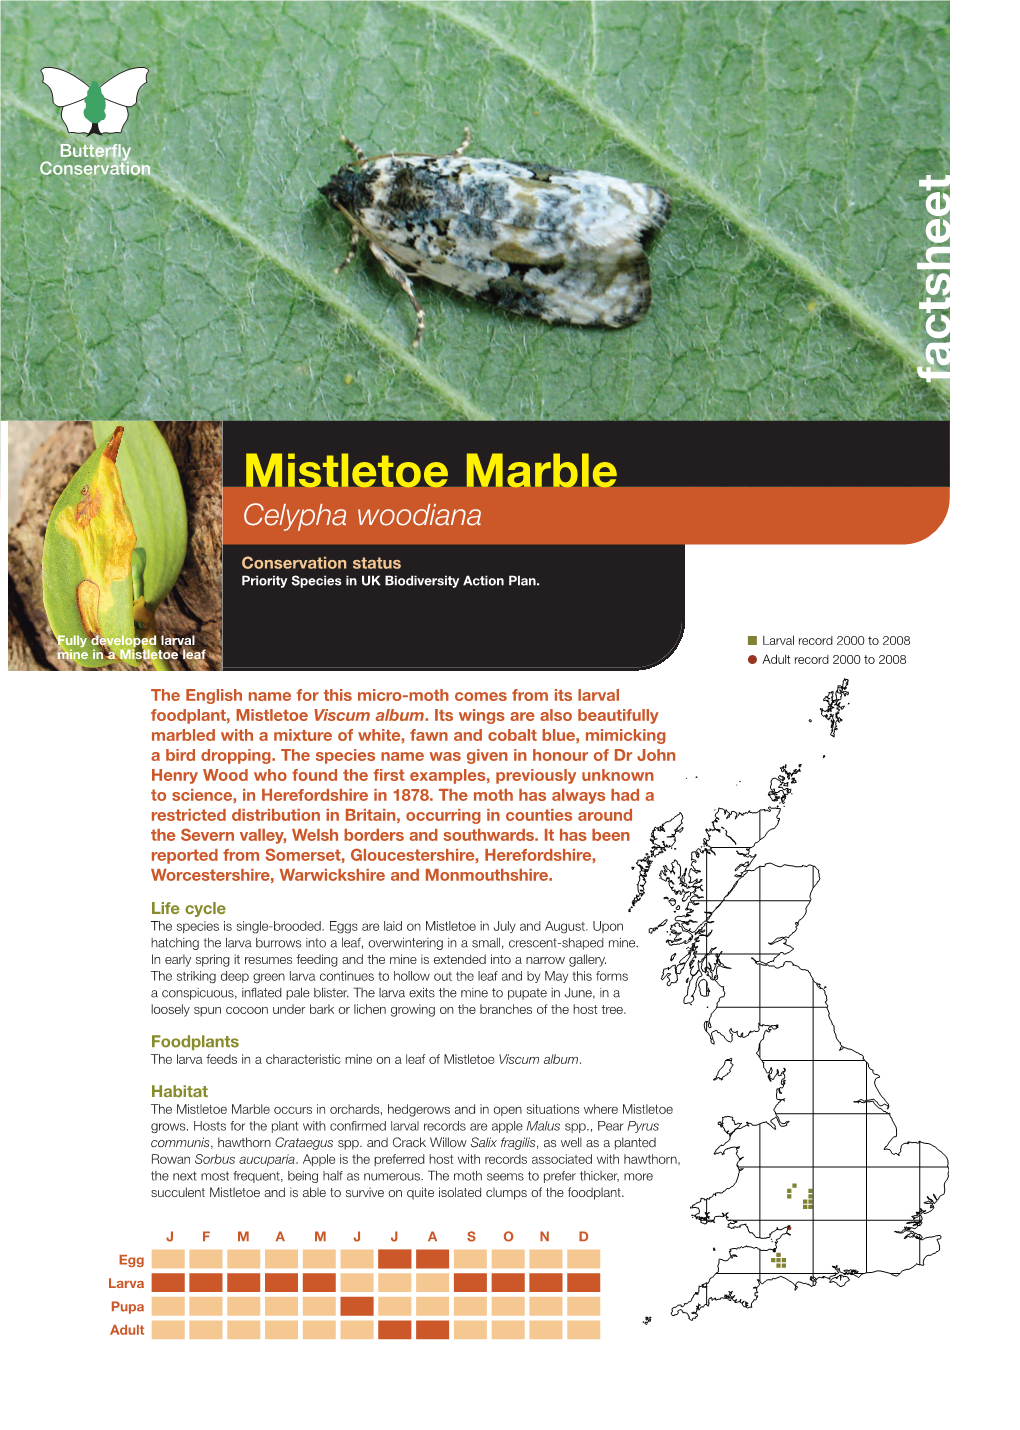 Mistletoe Marble Priority Species Factsheet